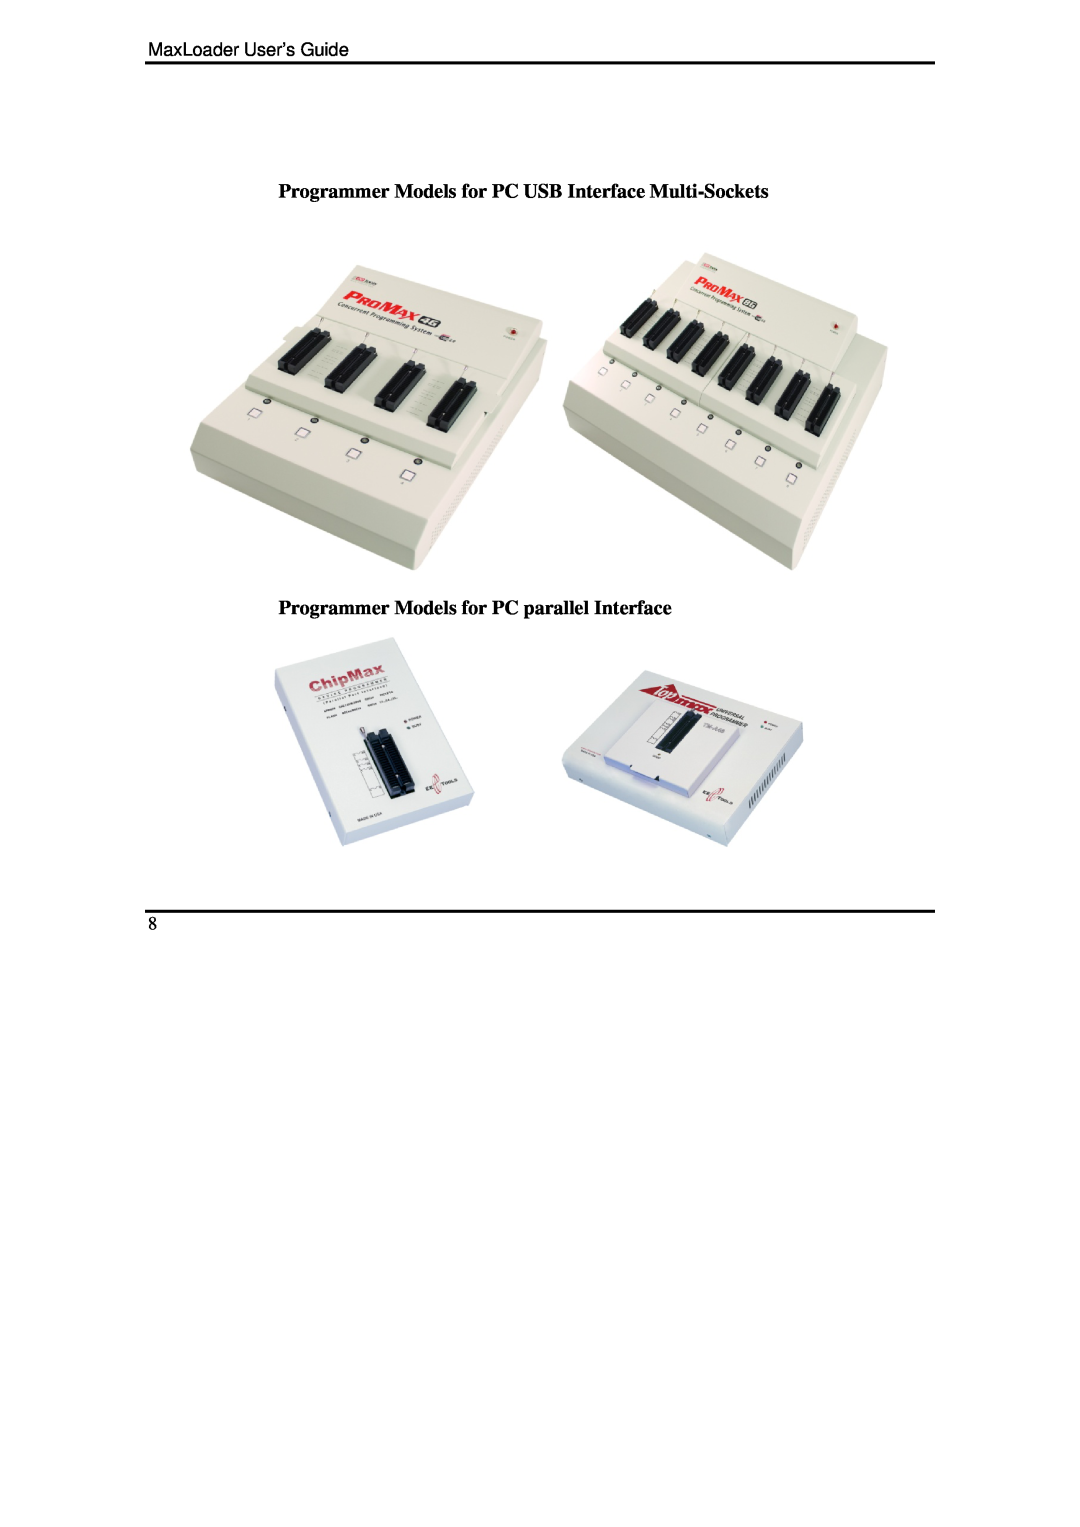 IBM MaxLoader manual Programmer Models for PC USB Interface Multi-Sockets, Programmer Models for PC parallel Interface 